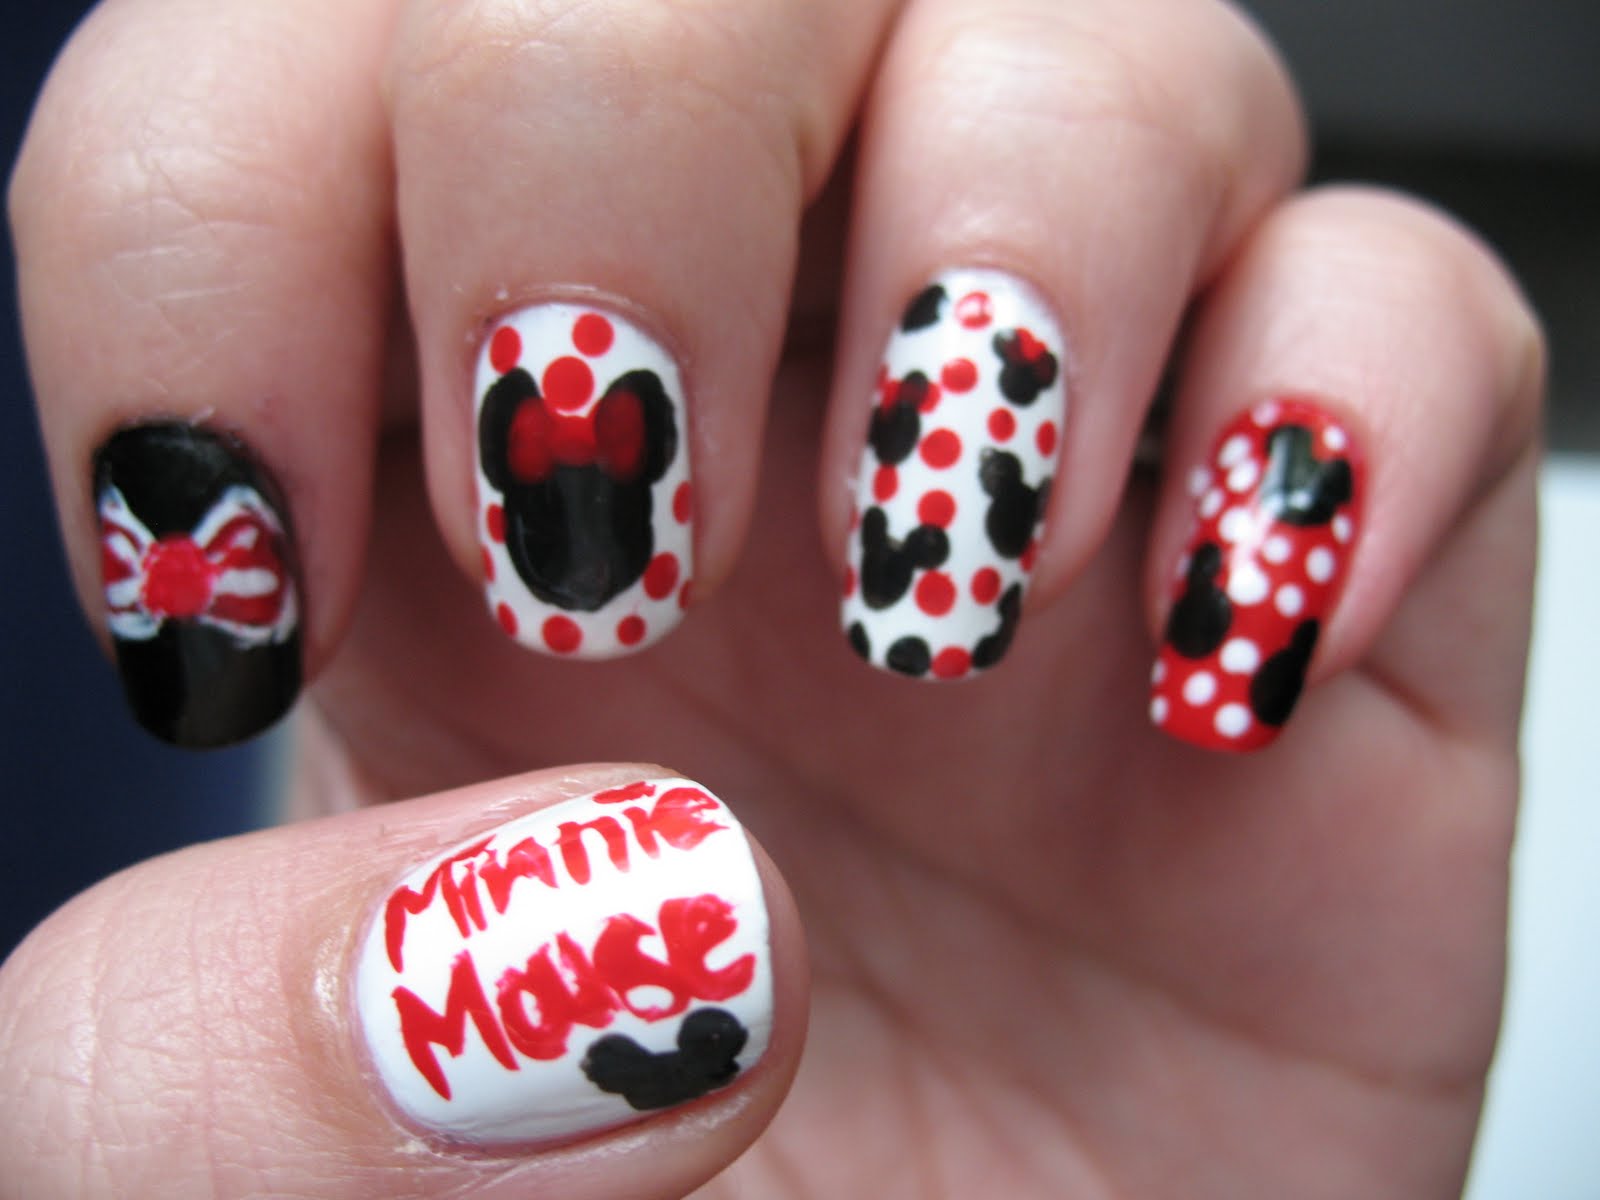 3. Minnie Mouse Nail Art Ideas - wide 1